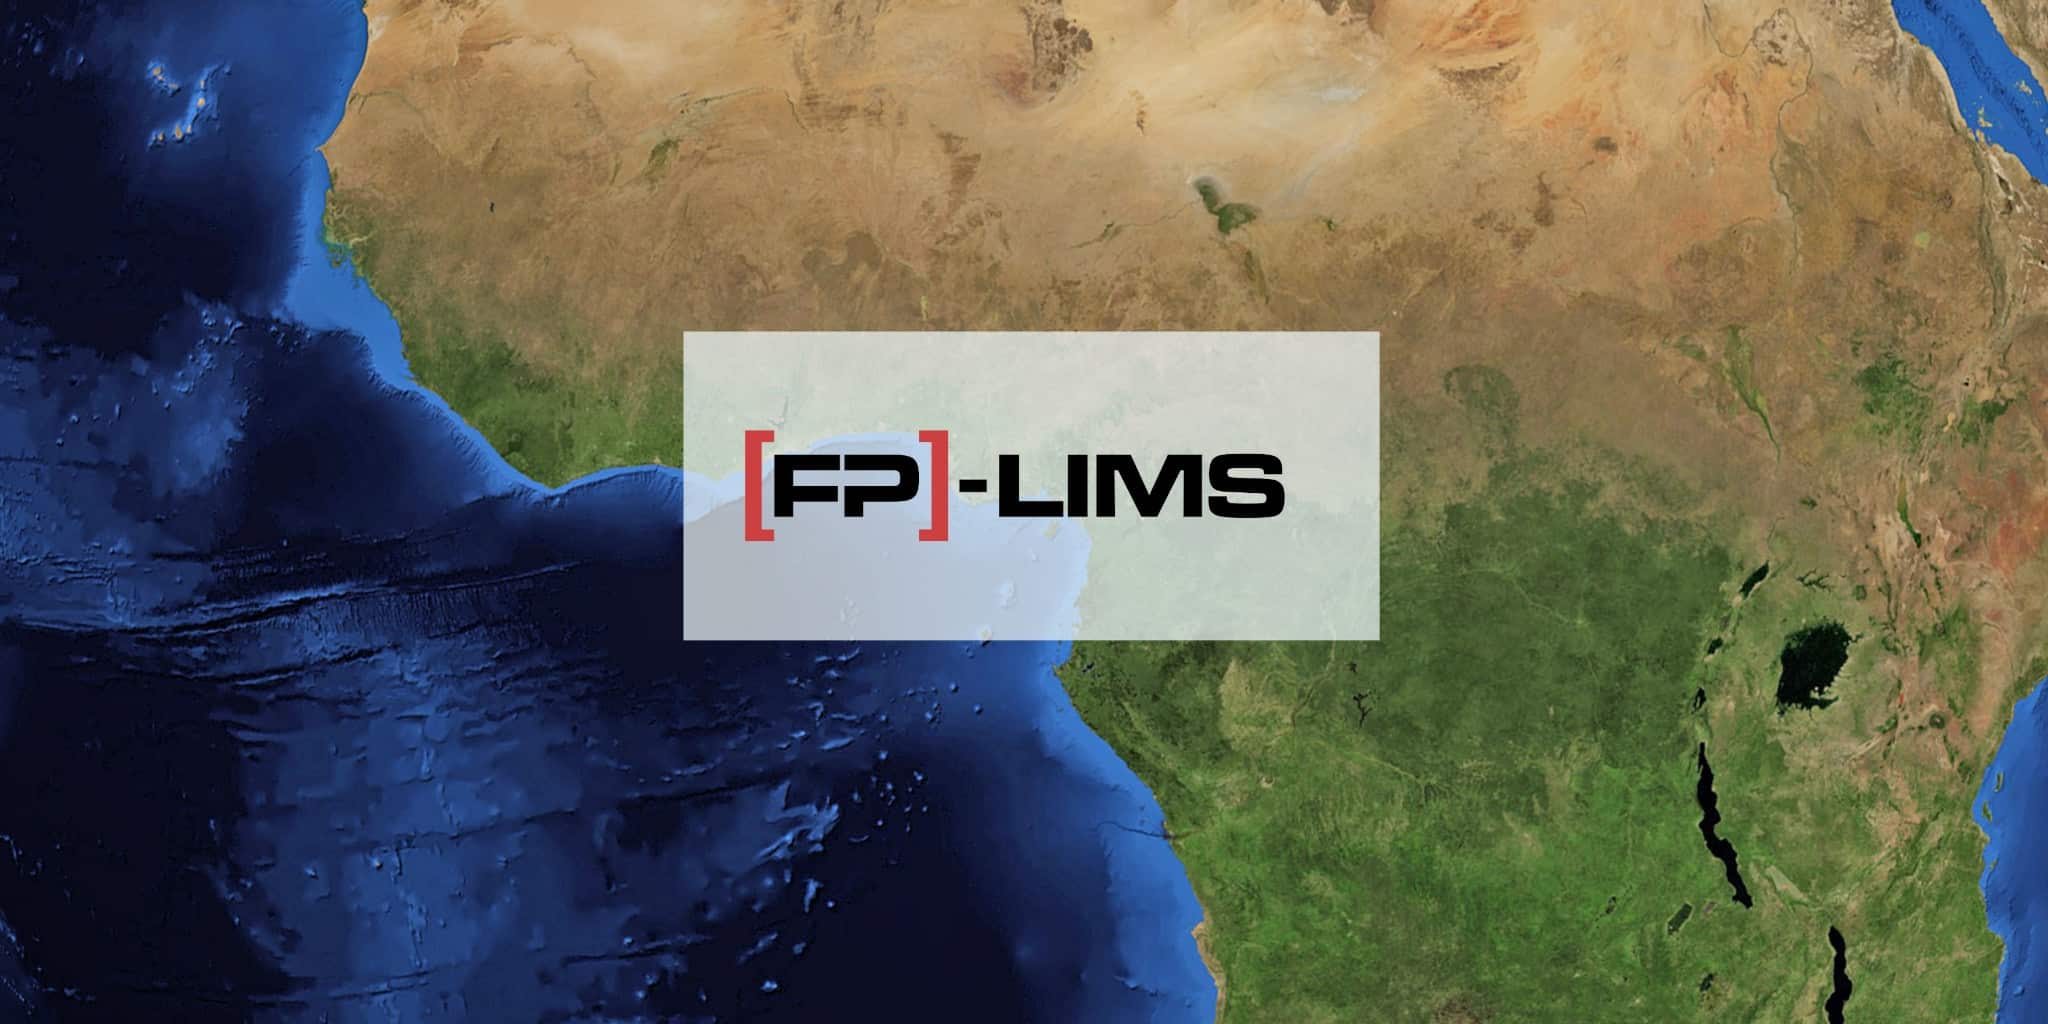 LIMS distributors worldwide FP-LIMS